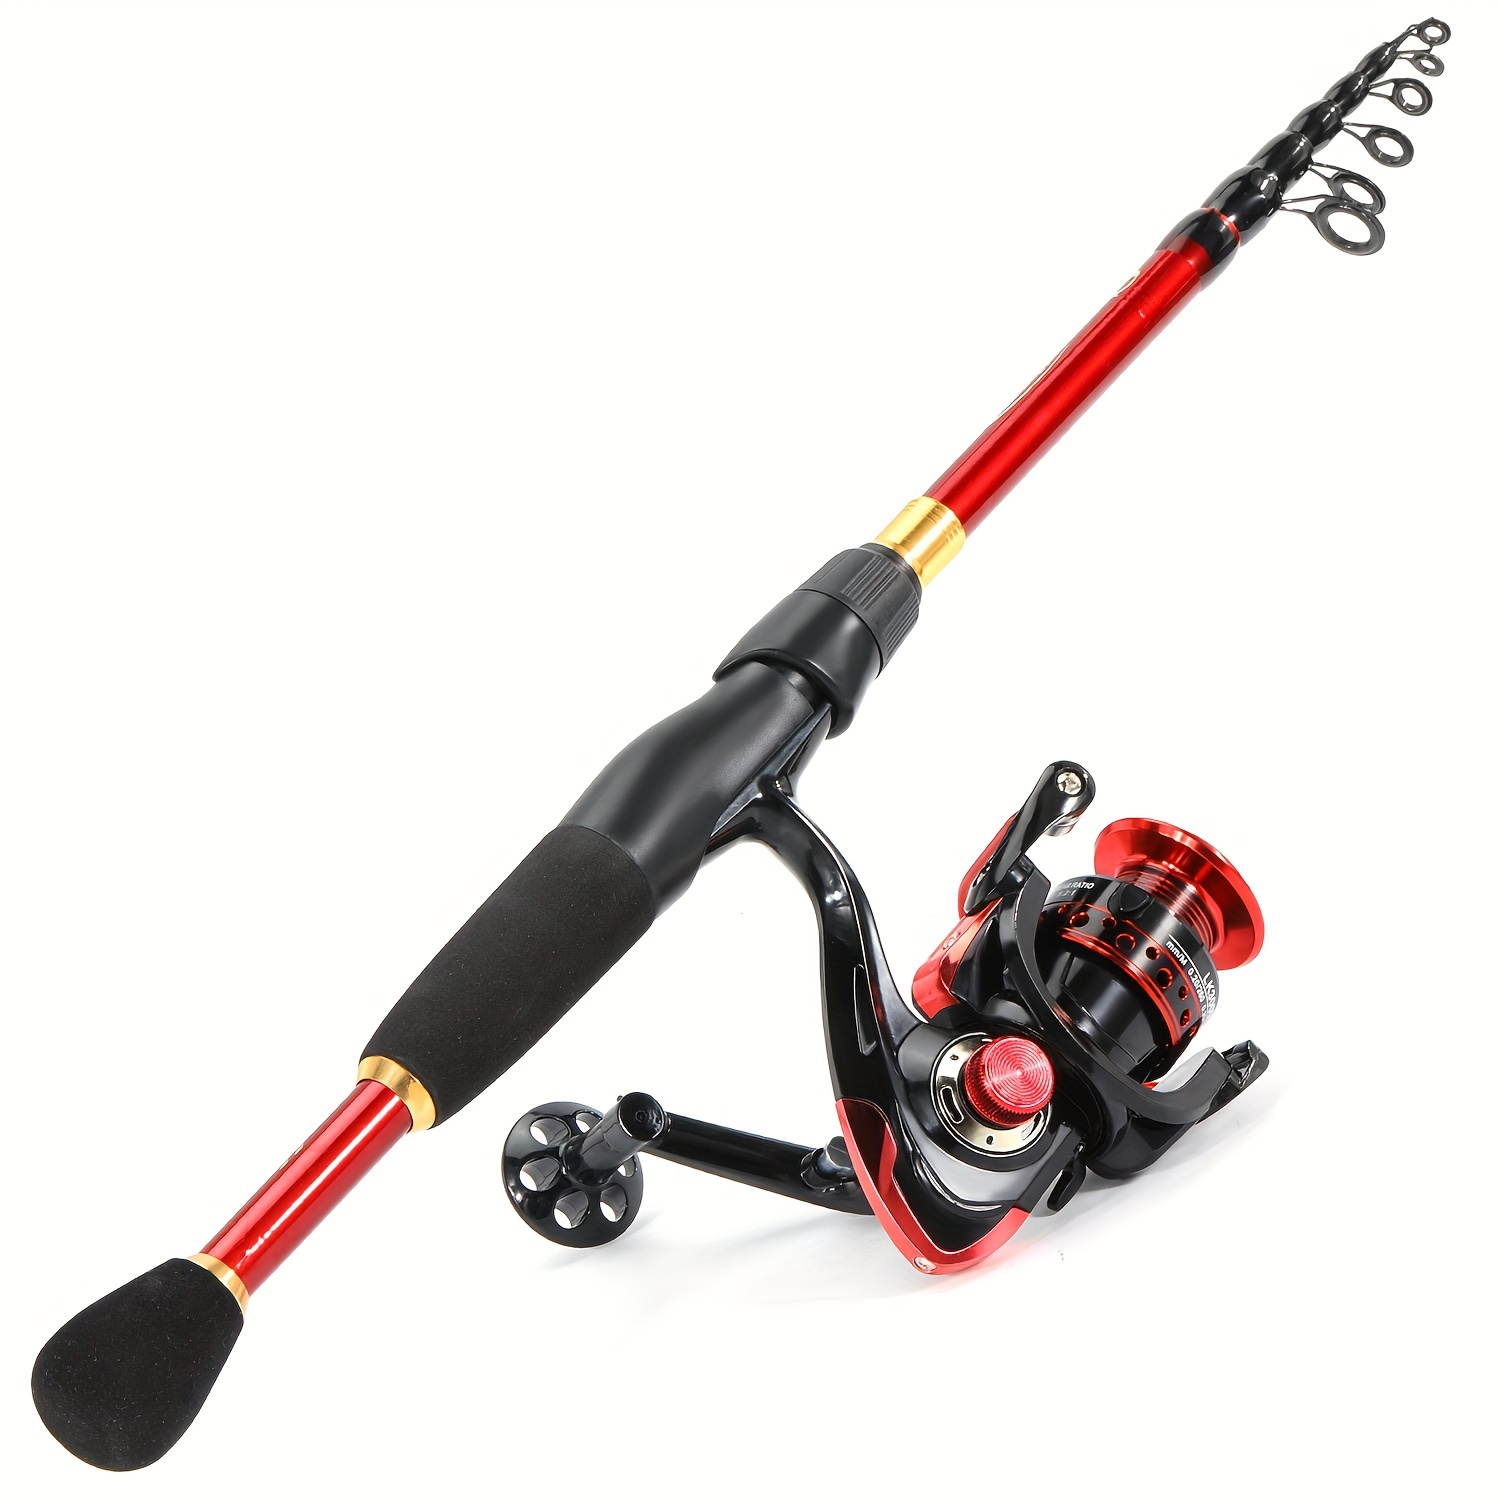 Sougayilang Fishing Rod Reel Set Red Straight Handle Fishing - Temu